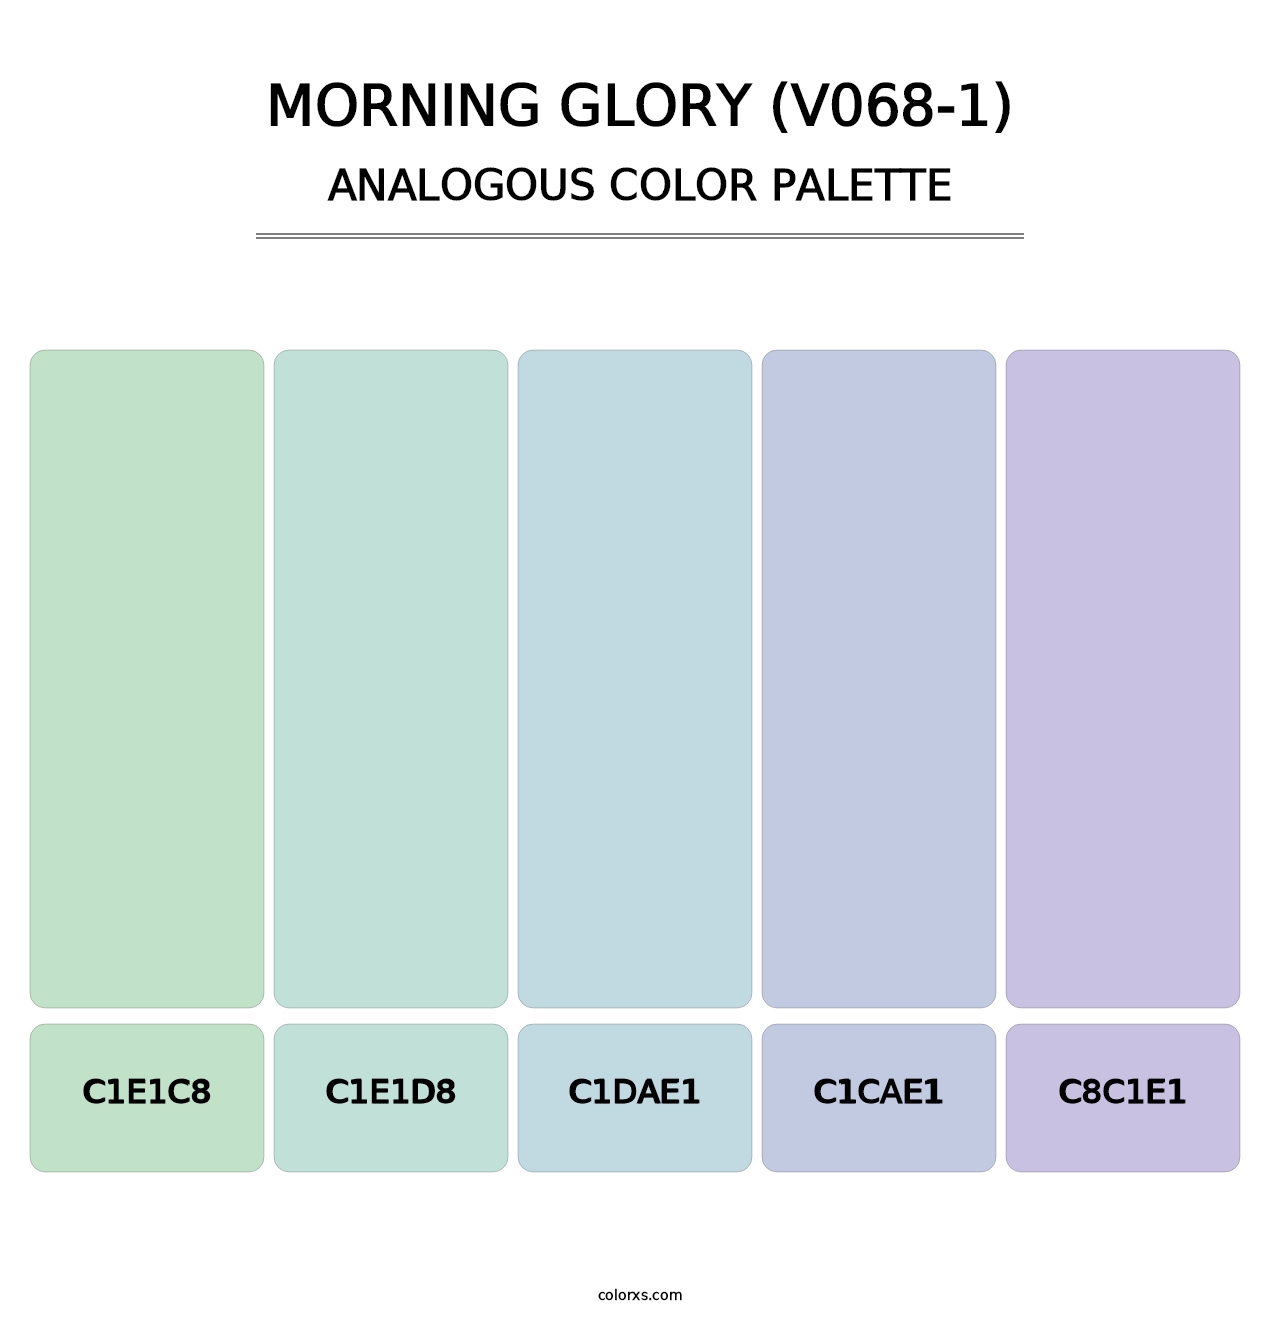 Morning Glory (V068-1) - Analogous Color Palette